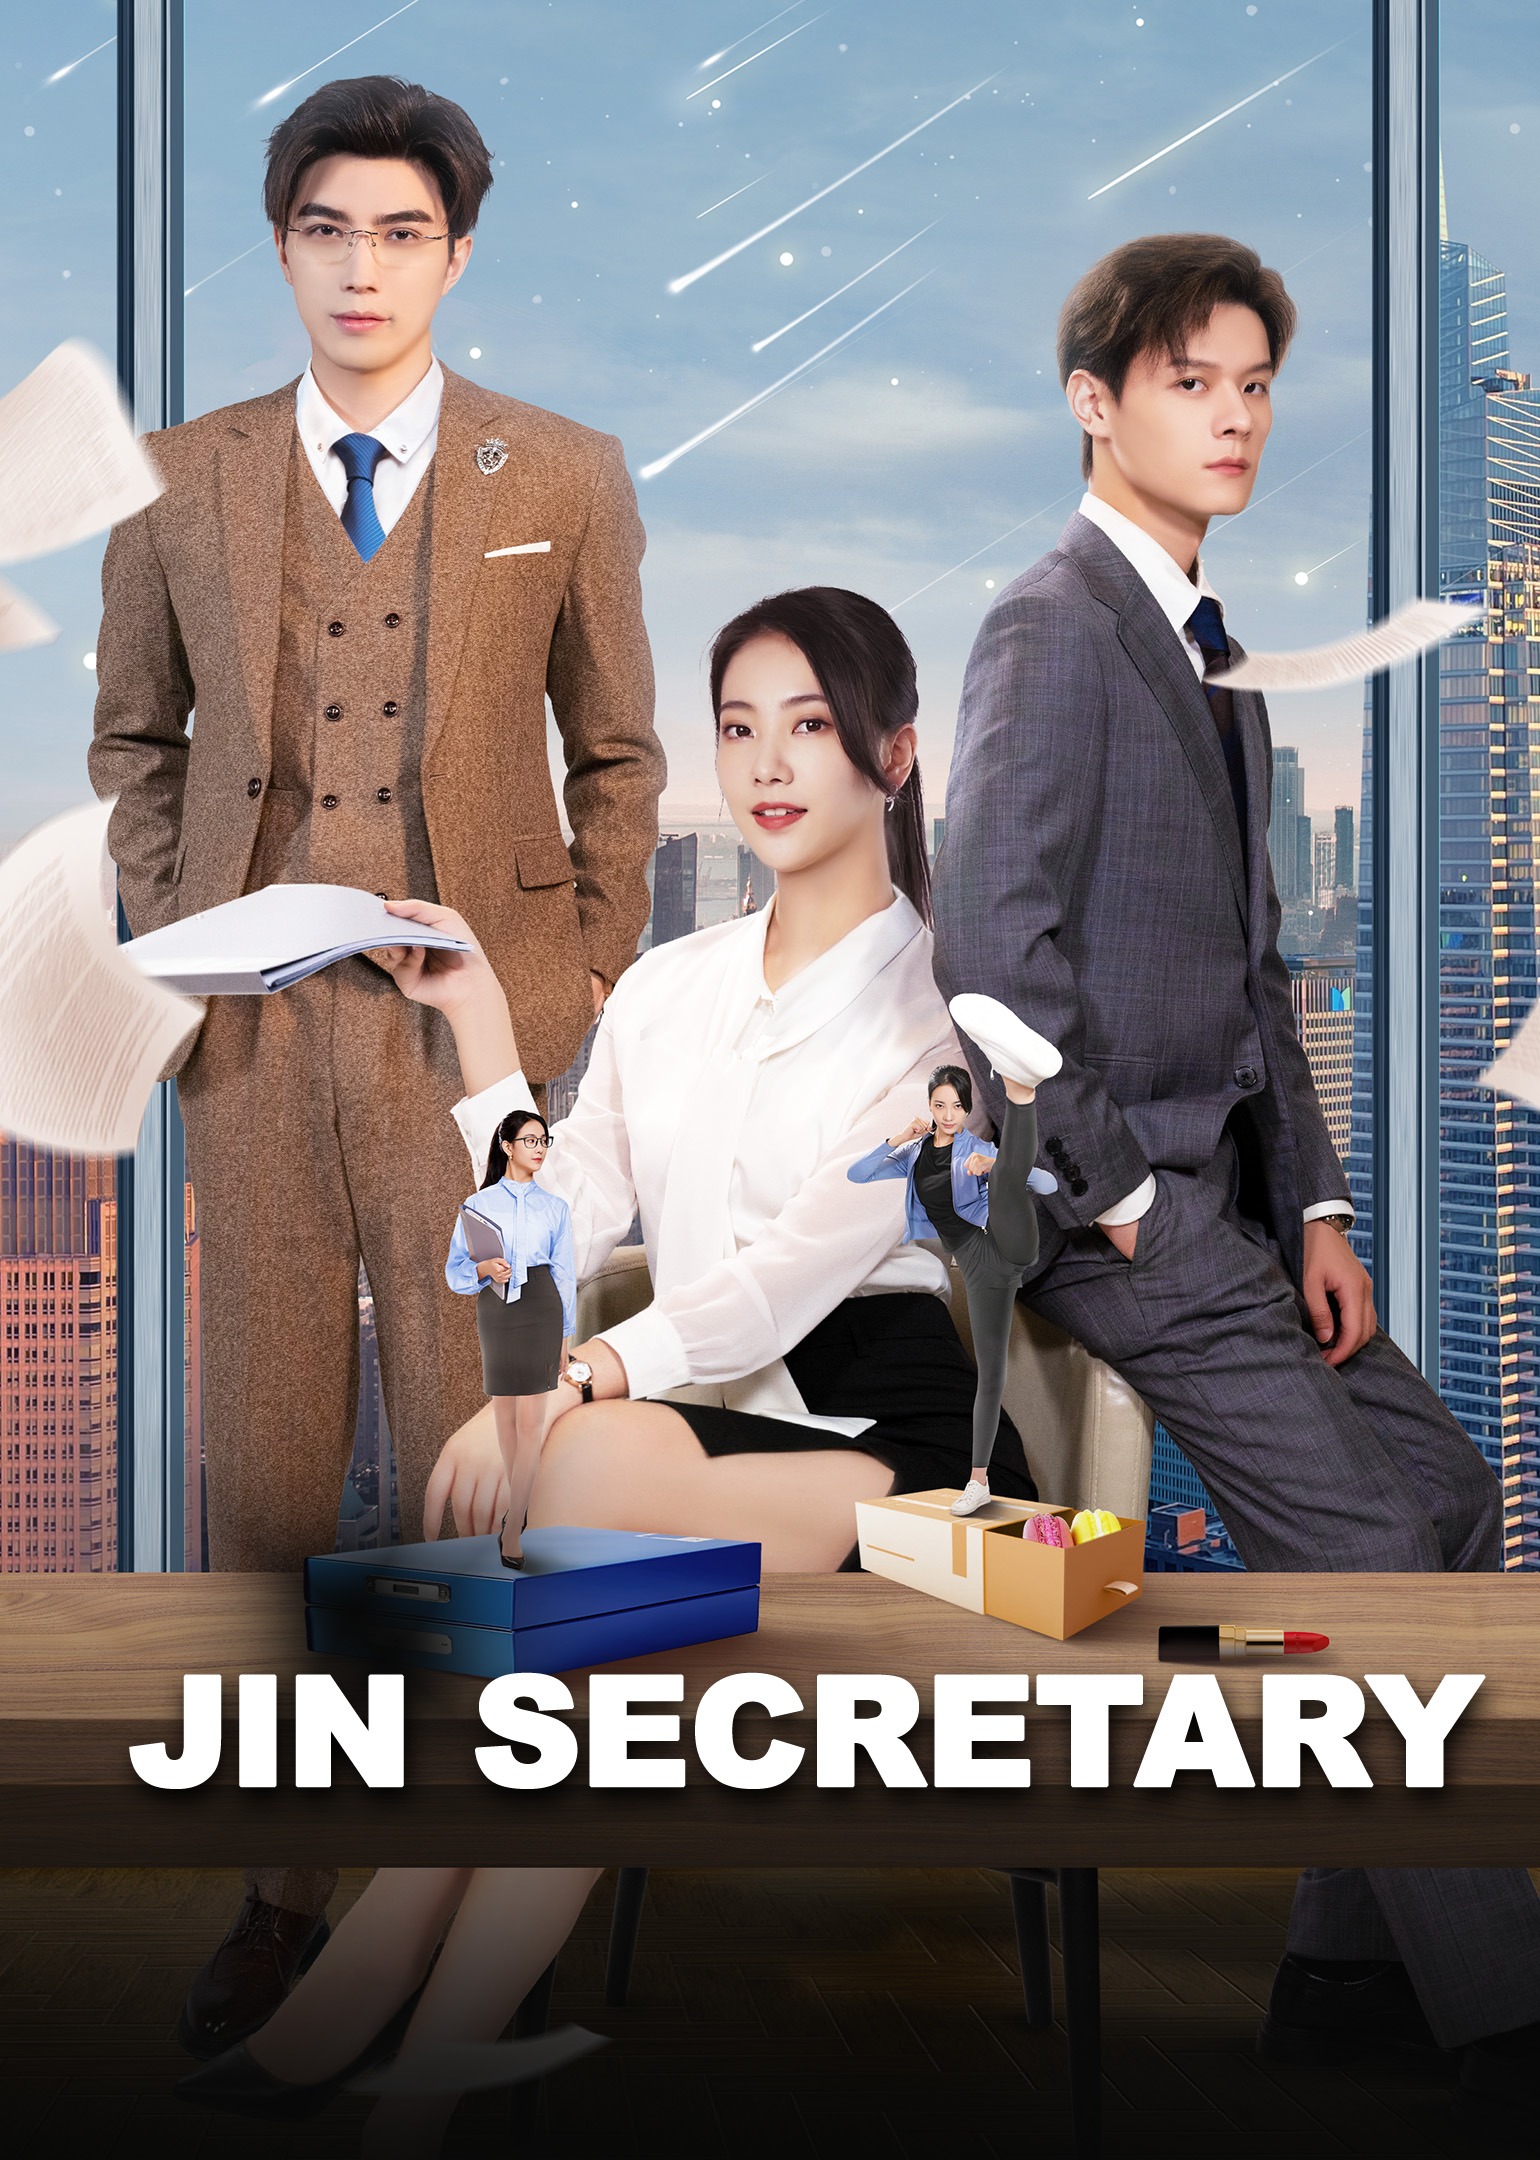 Secretaria Jin